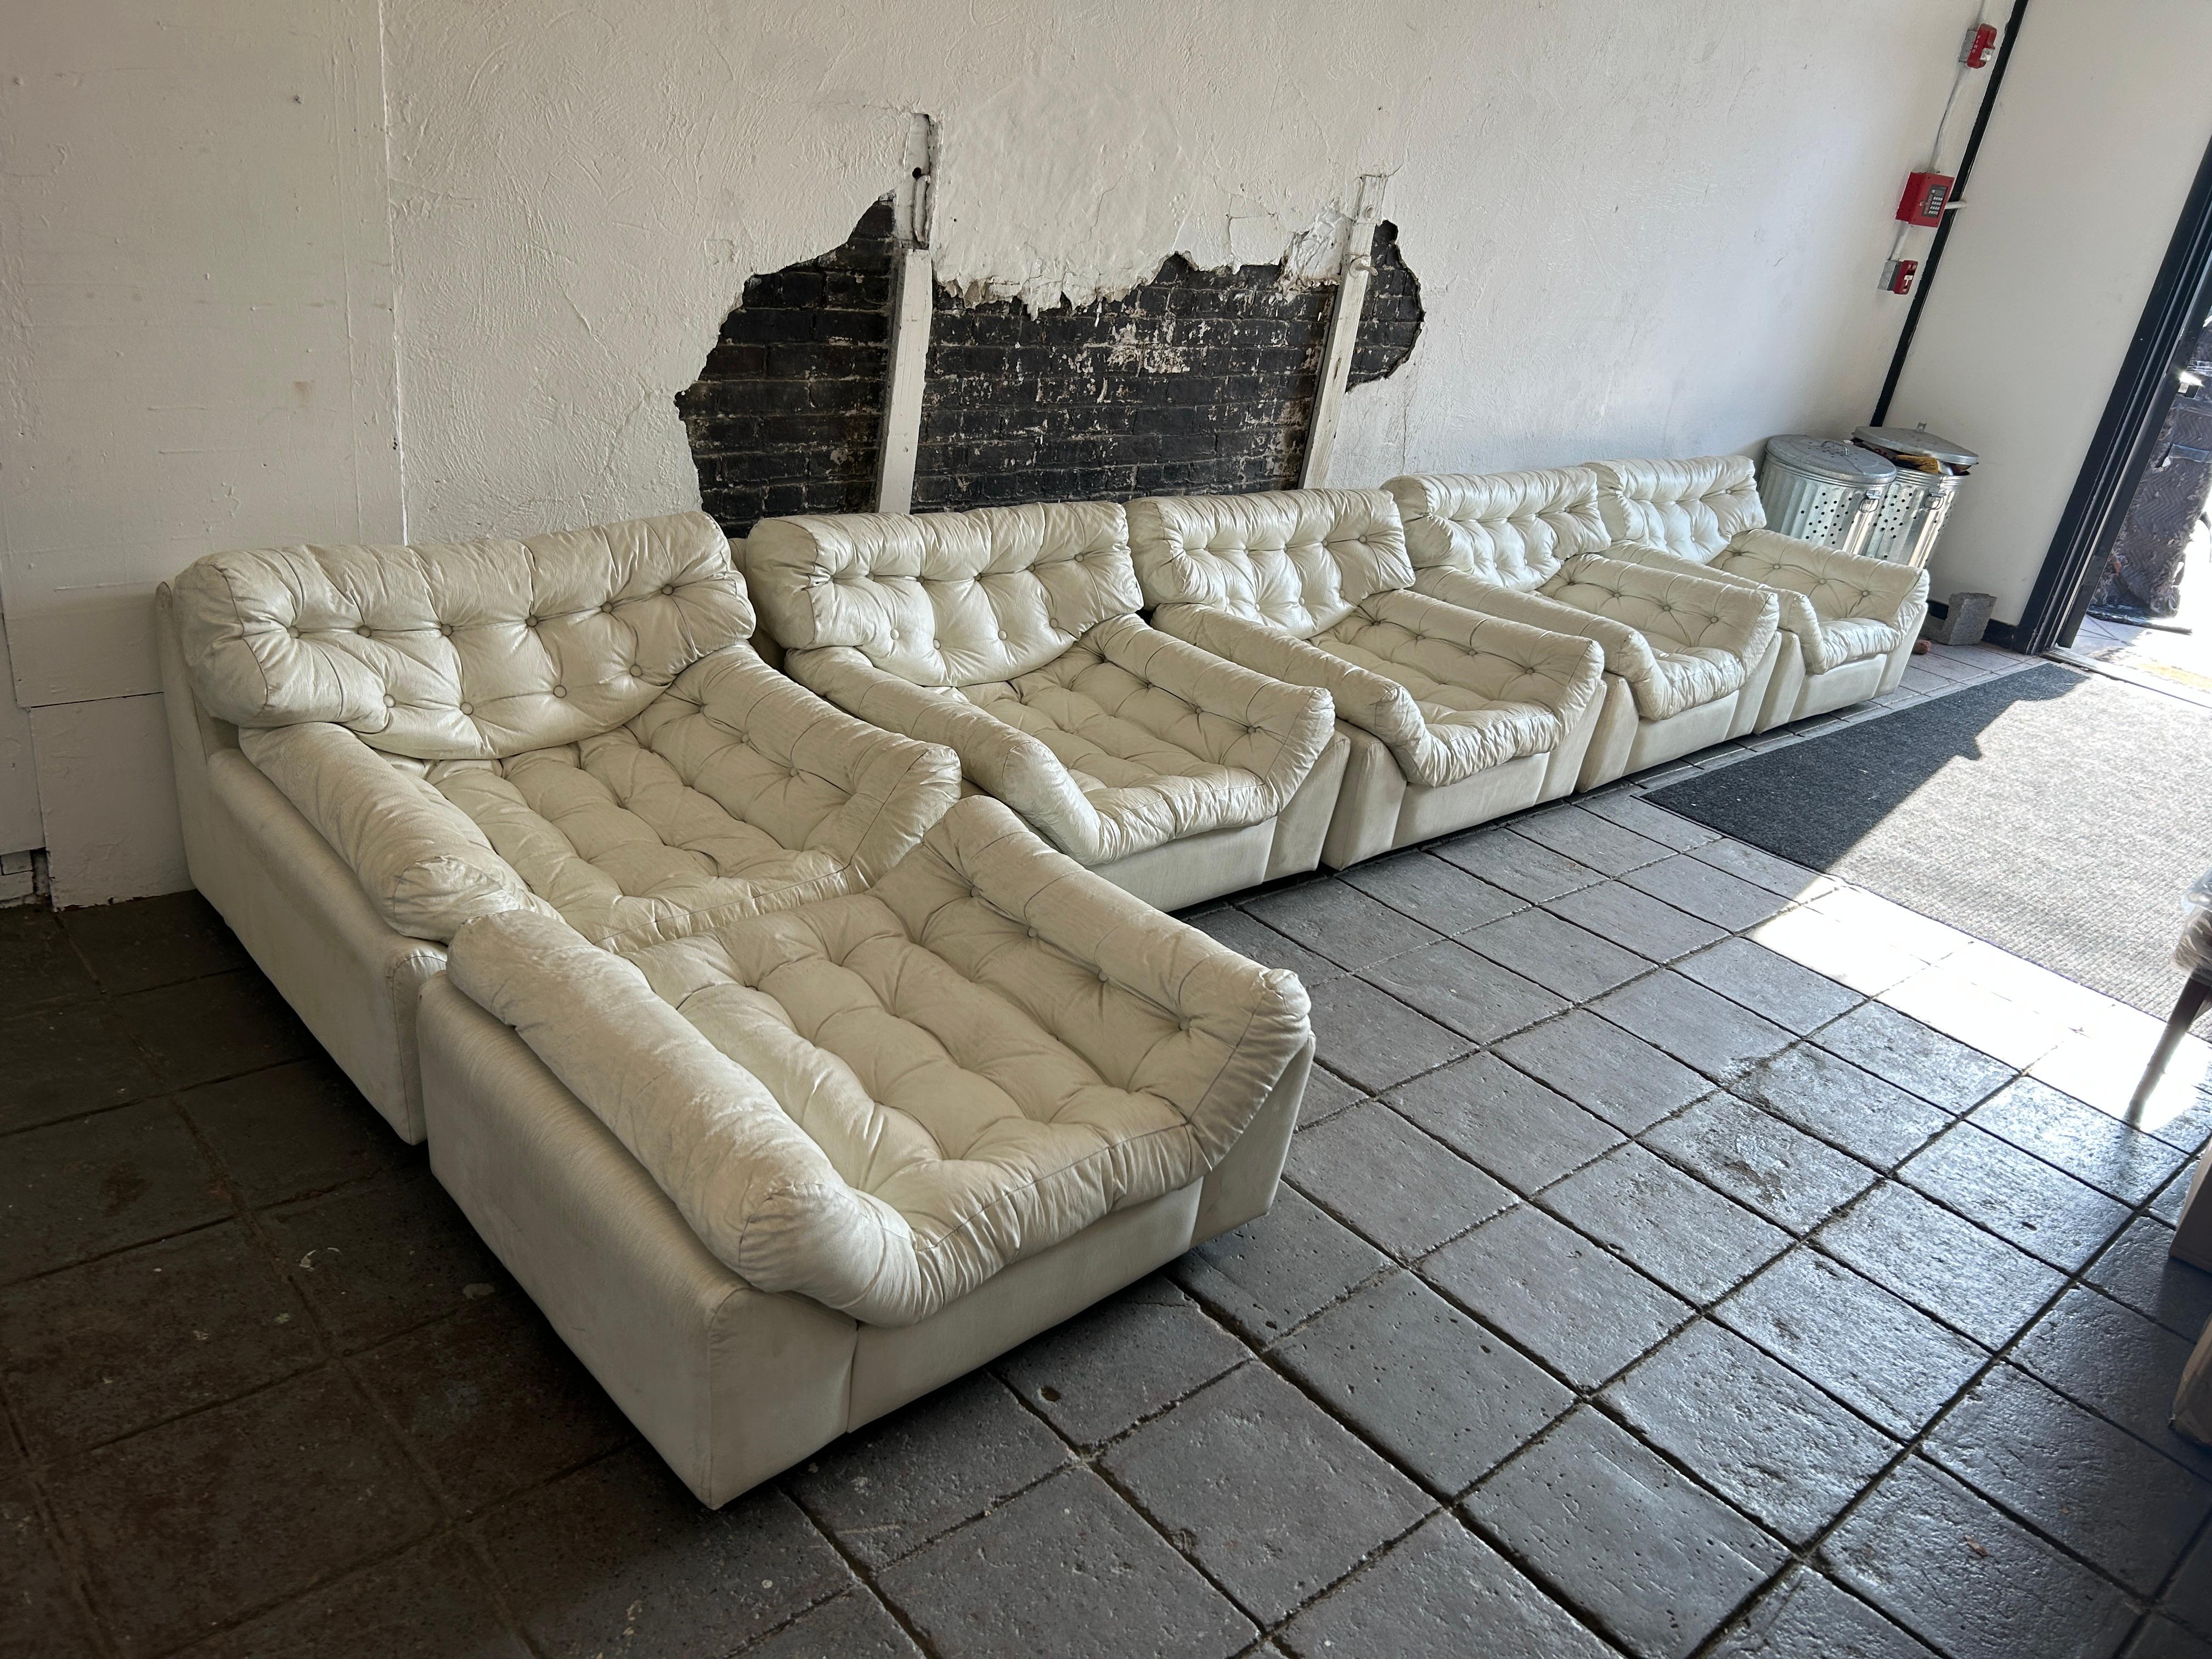 Woodwork 6 piece Swedish Post modern pop art Low sectional sofa by lennart bender